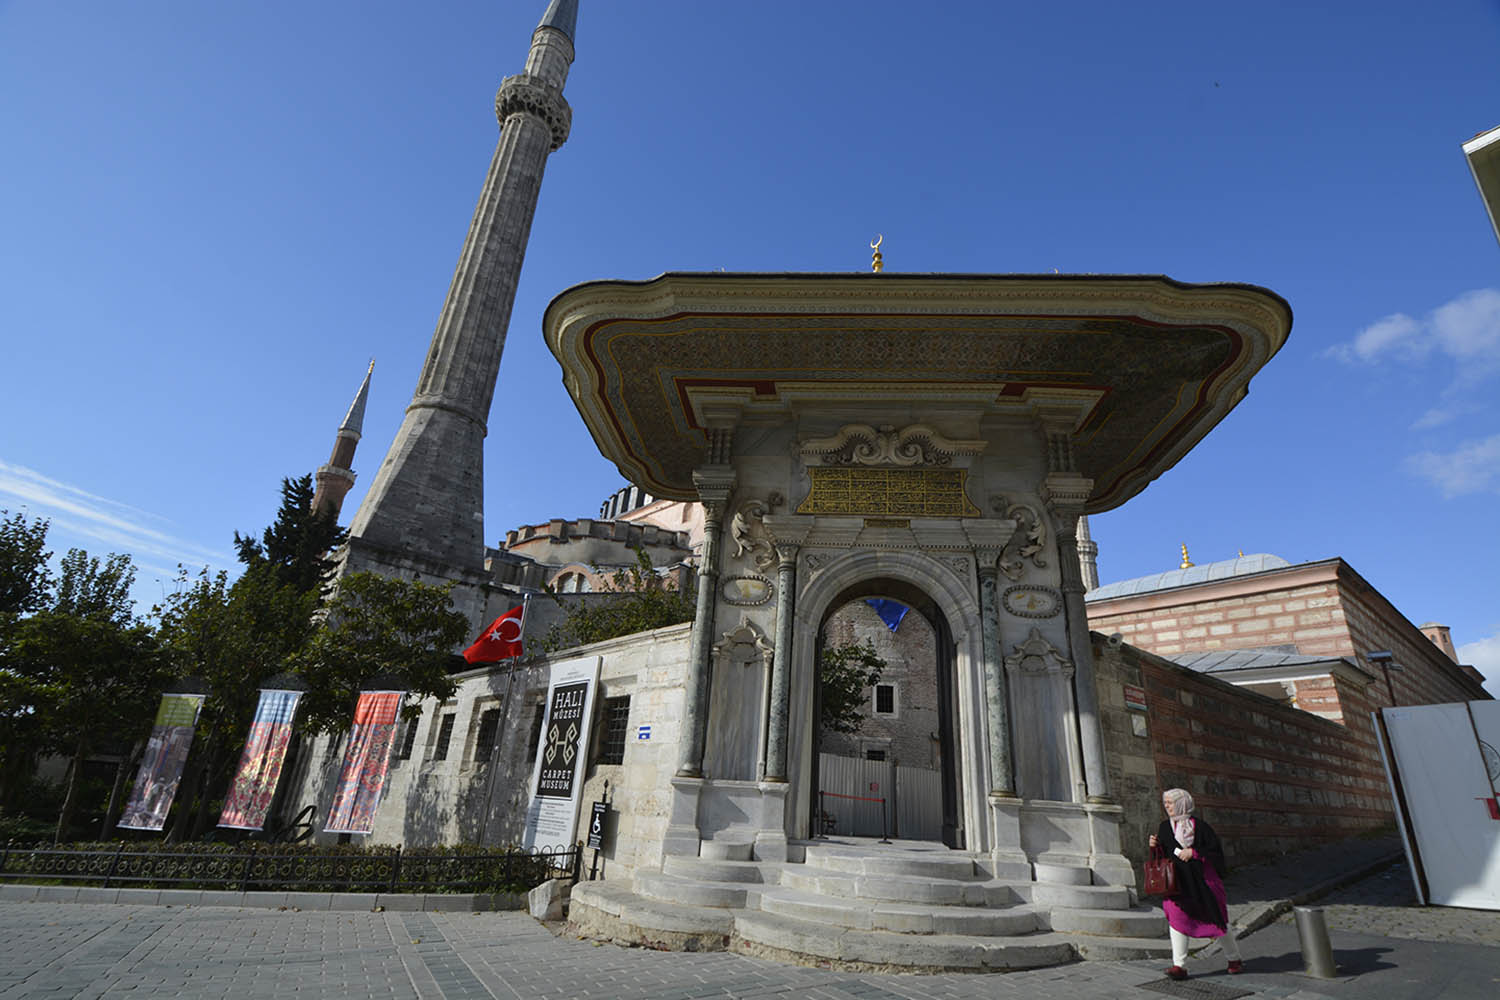 Hagia Sophia - Entrance to the Carpet Museum (Hali Muzesi), housed in the soup kitchen (Imaret) of Aya Sofya.